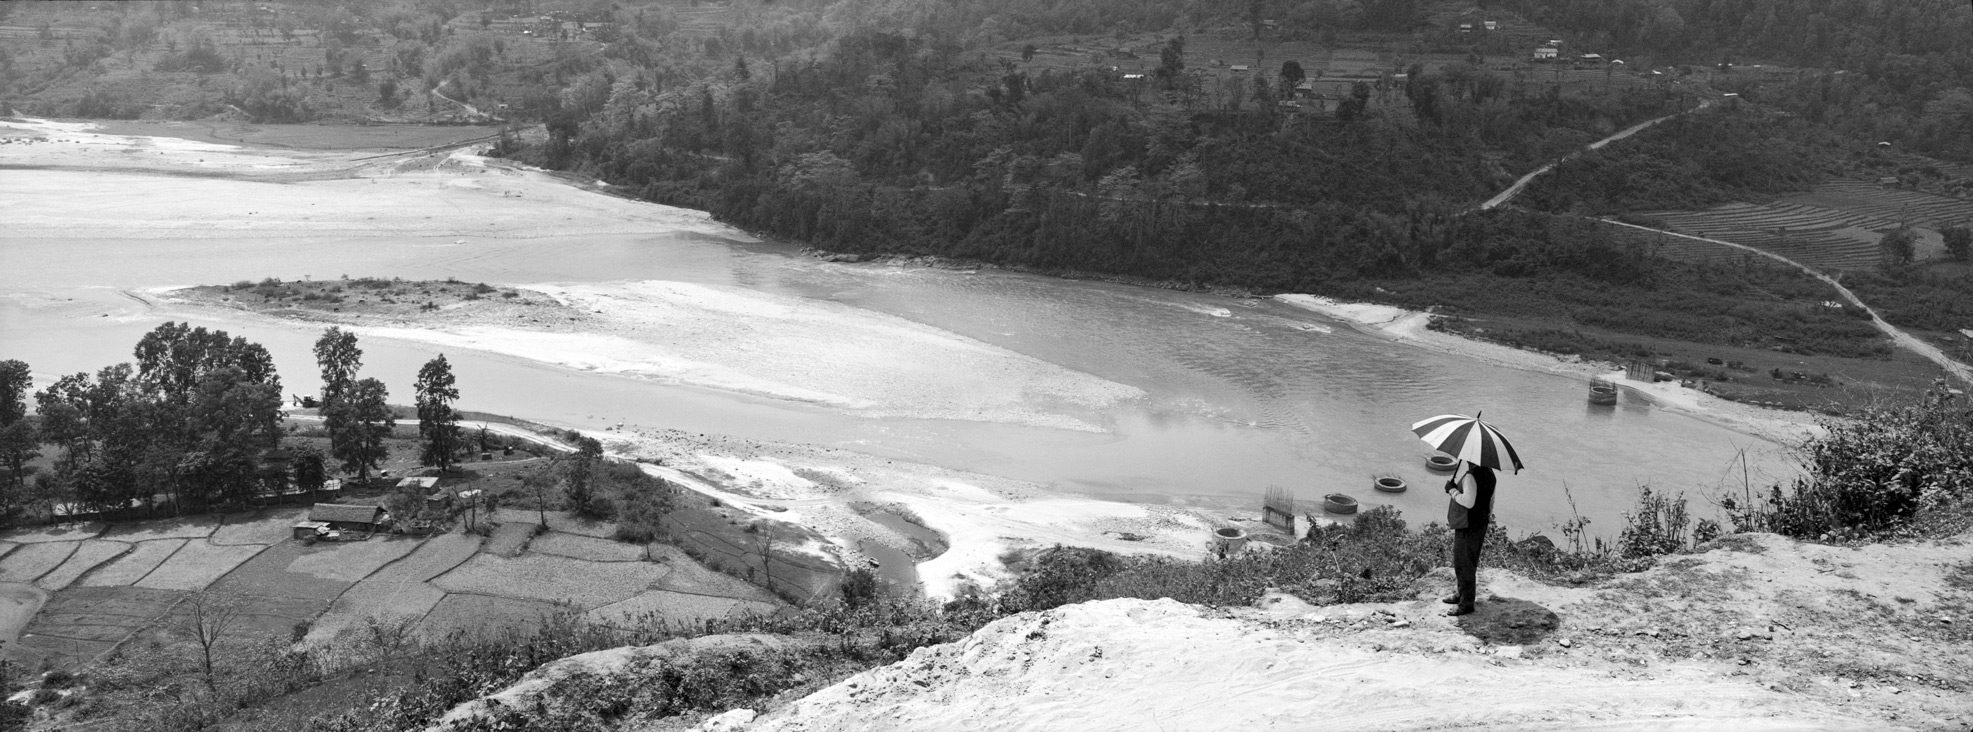 River Arun, near Tumlingtar, f = 16, exp = 1 / 250s,